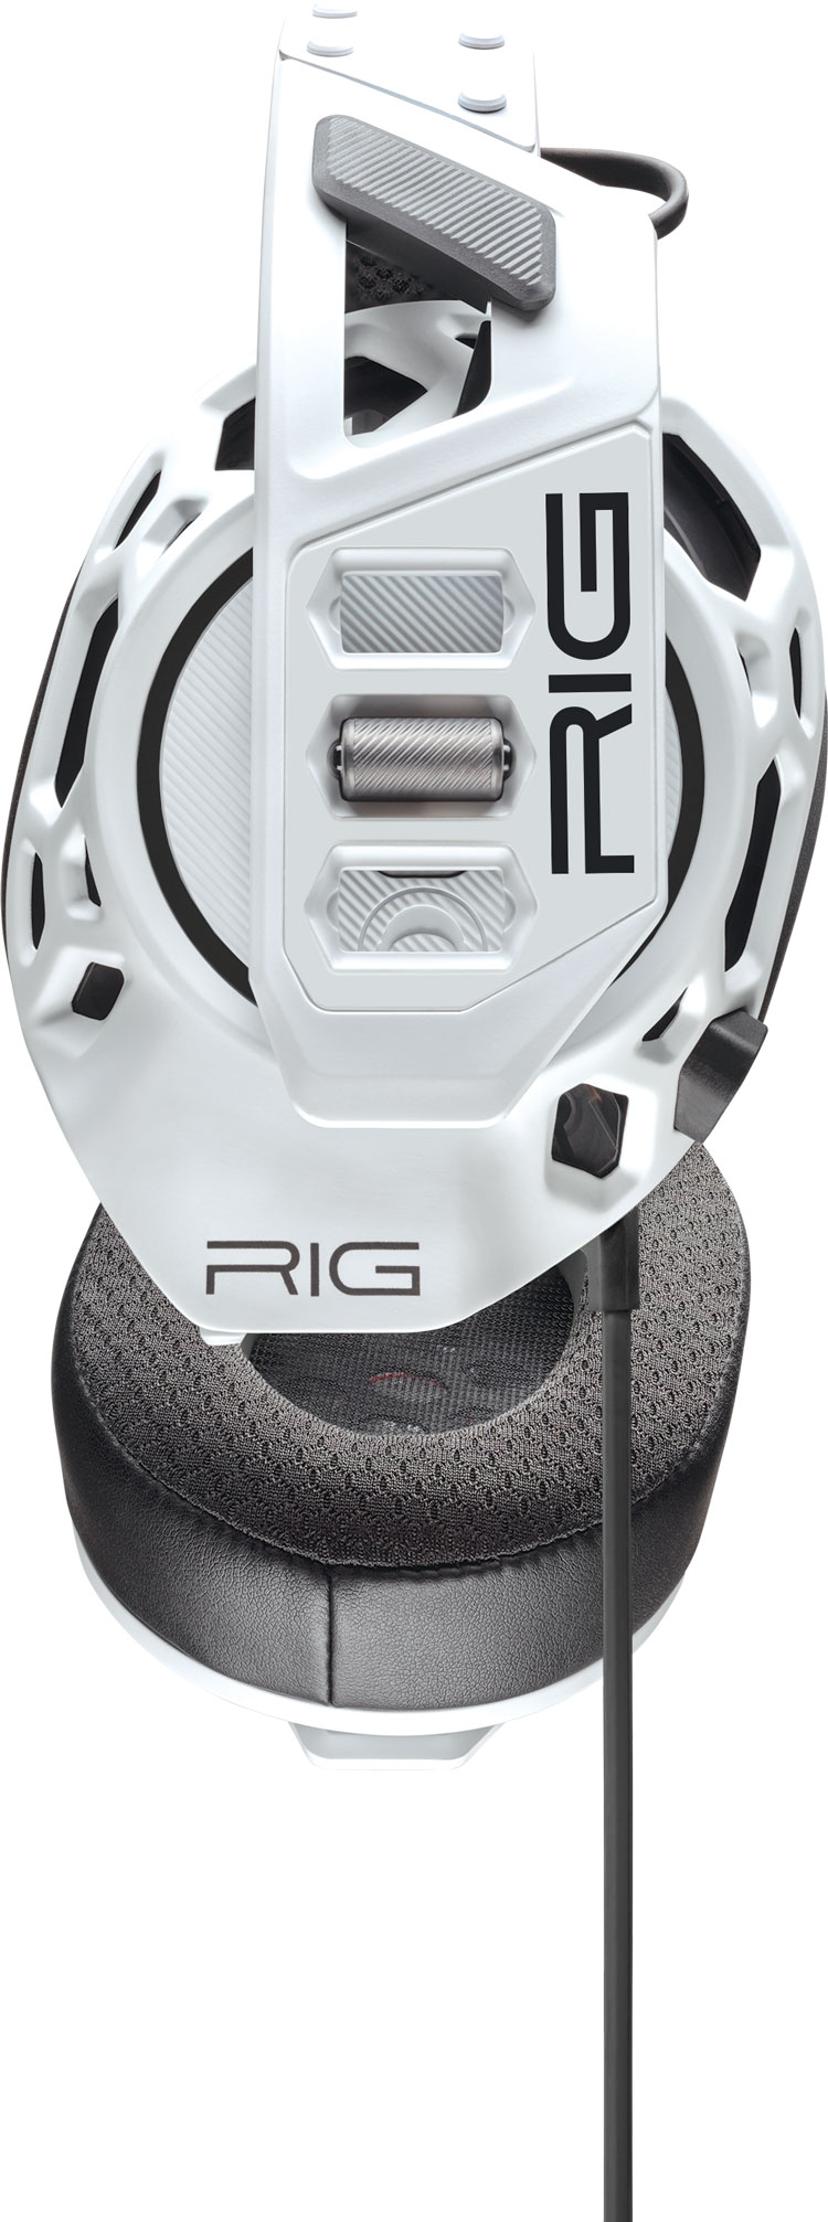 Rig 500 Pro Hc -White